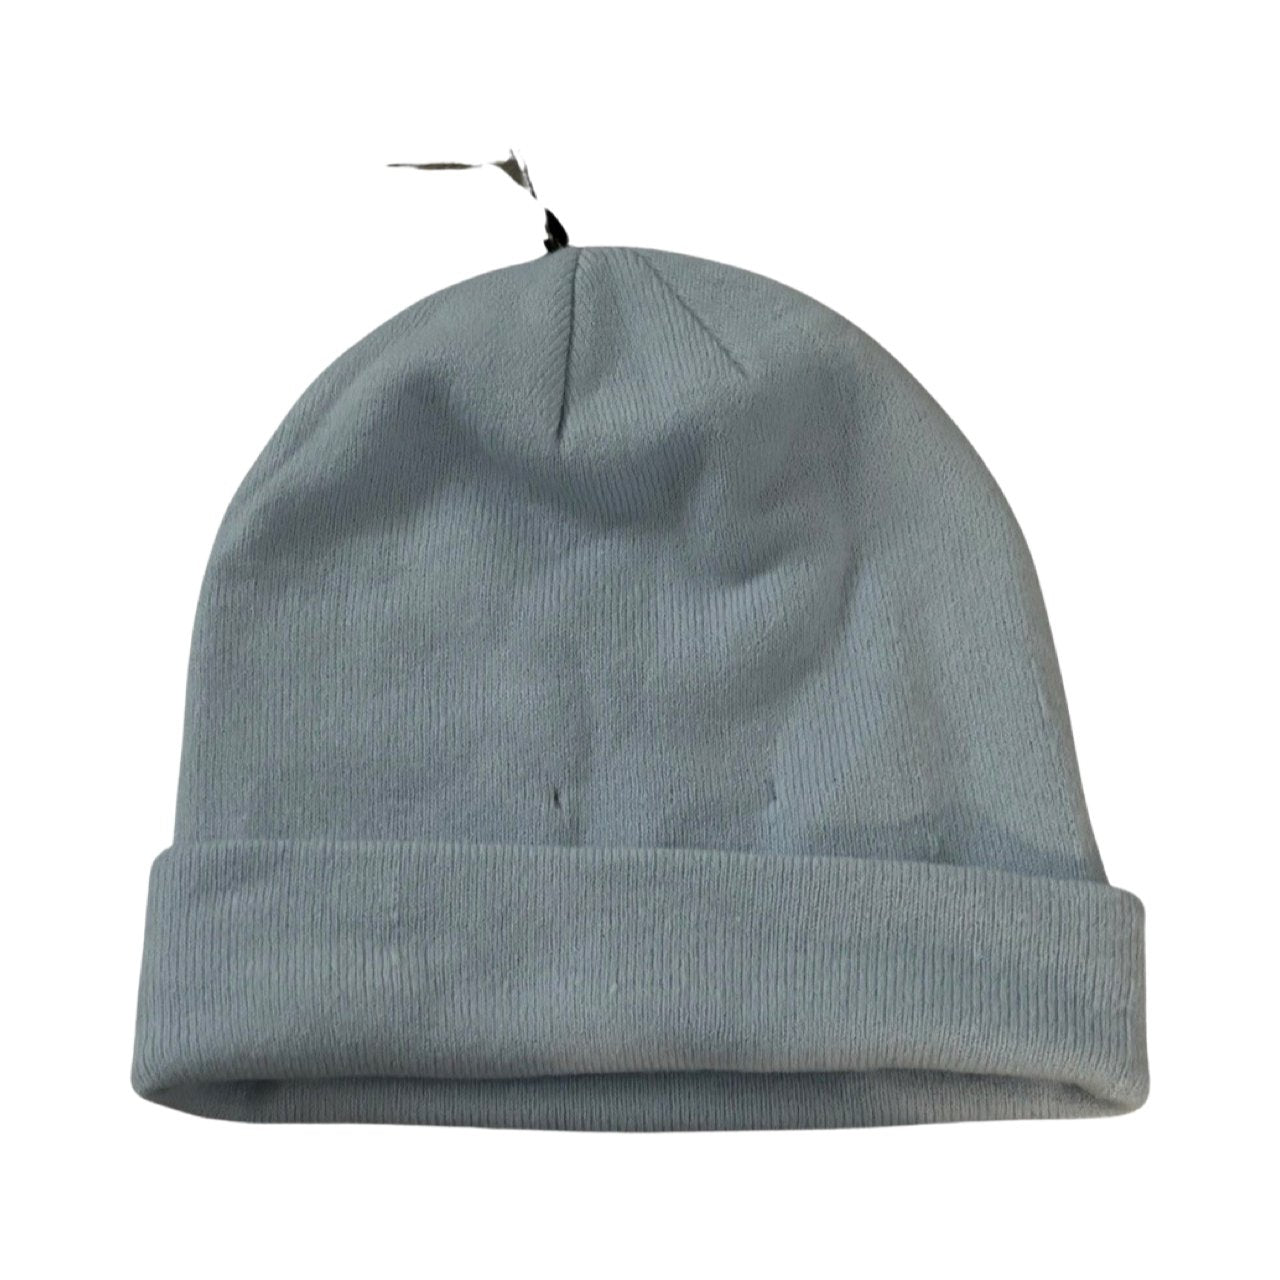 Lyle & Scott Baby blue Beanie Hat - One size - Soul and Sense Streetwear